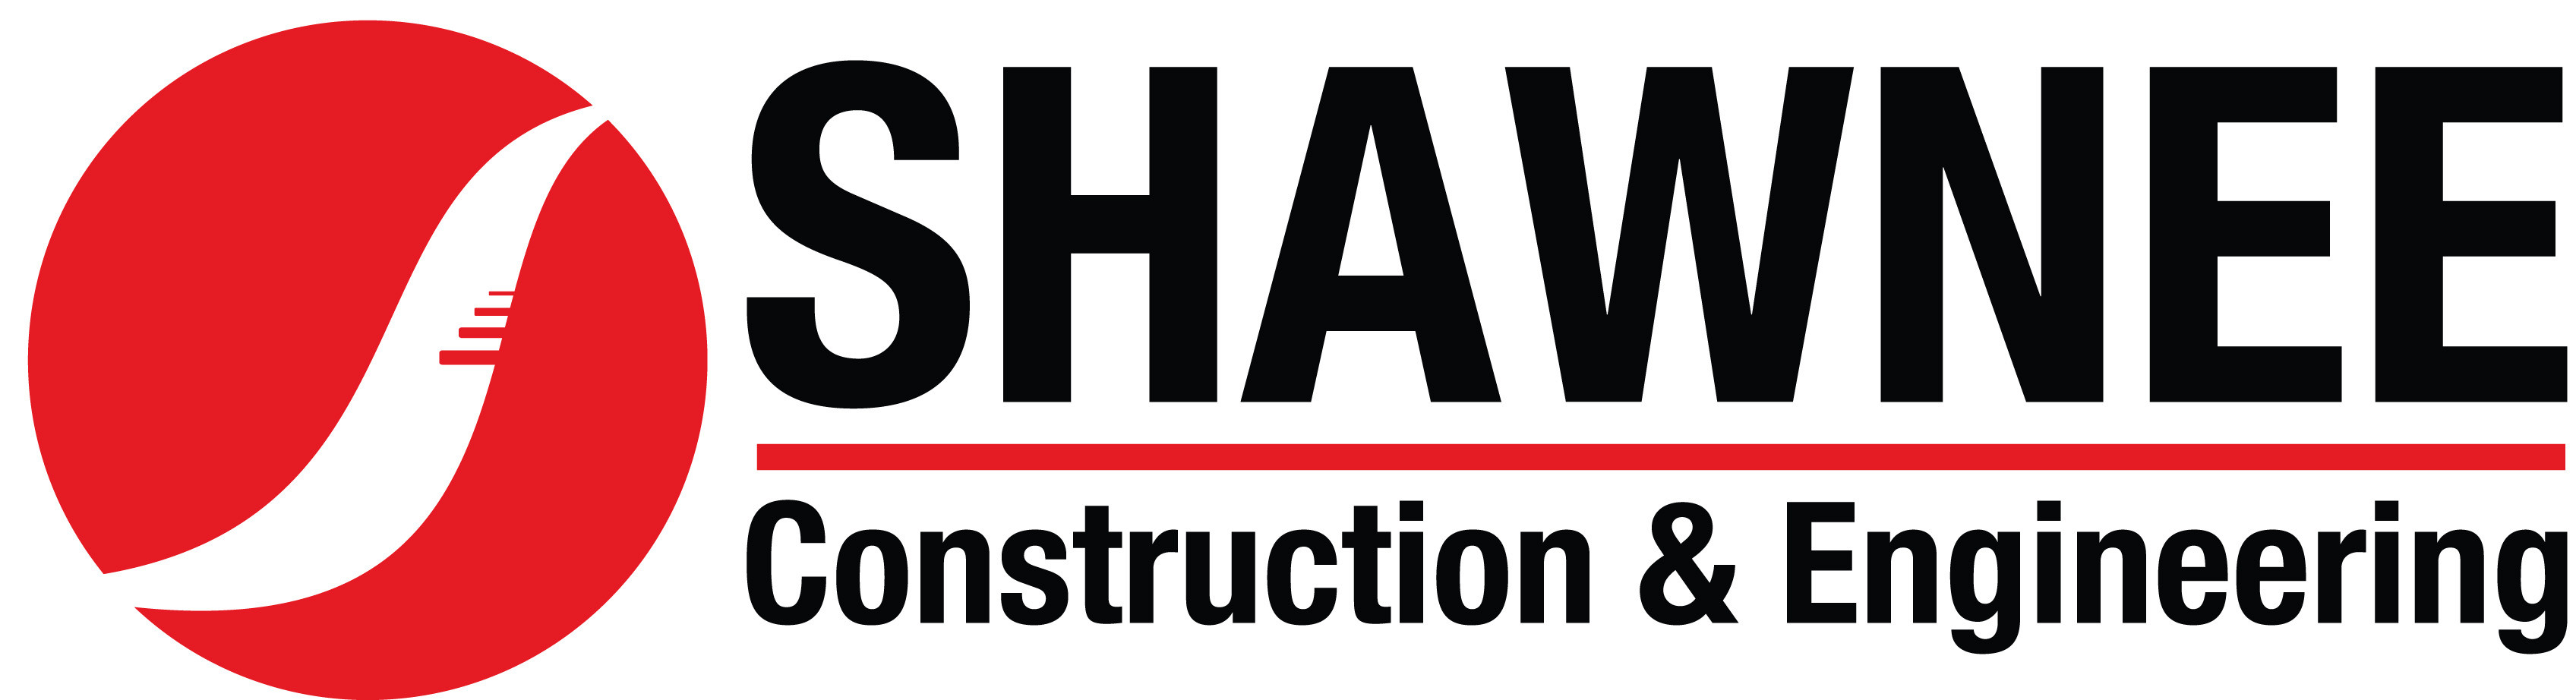 Shawnee Construction and Engineering 